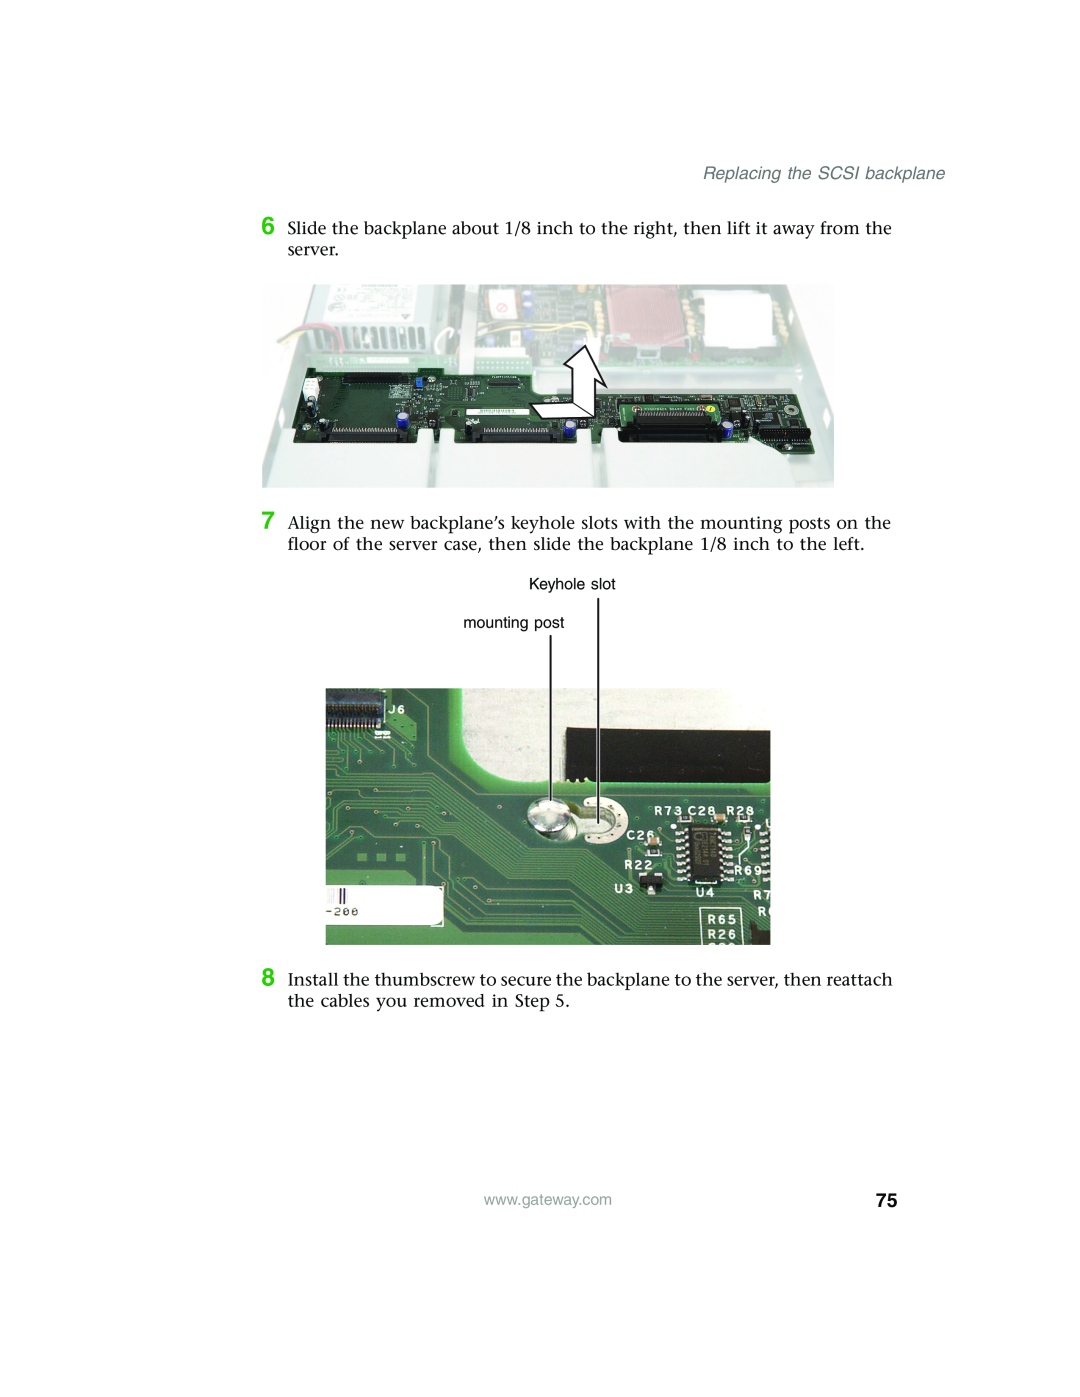 Gateway 955 manual Replacing the SCSI backplane, Keyhole slot mounting post 